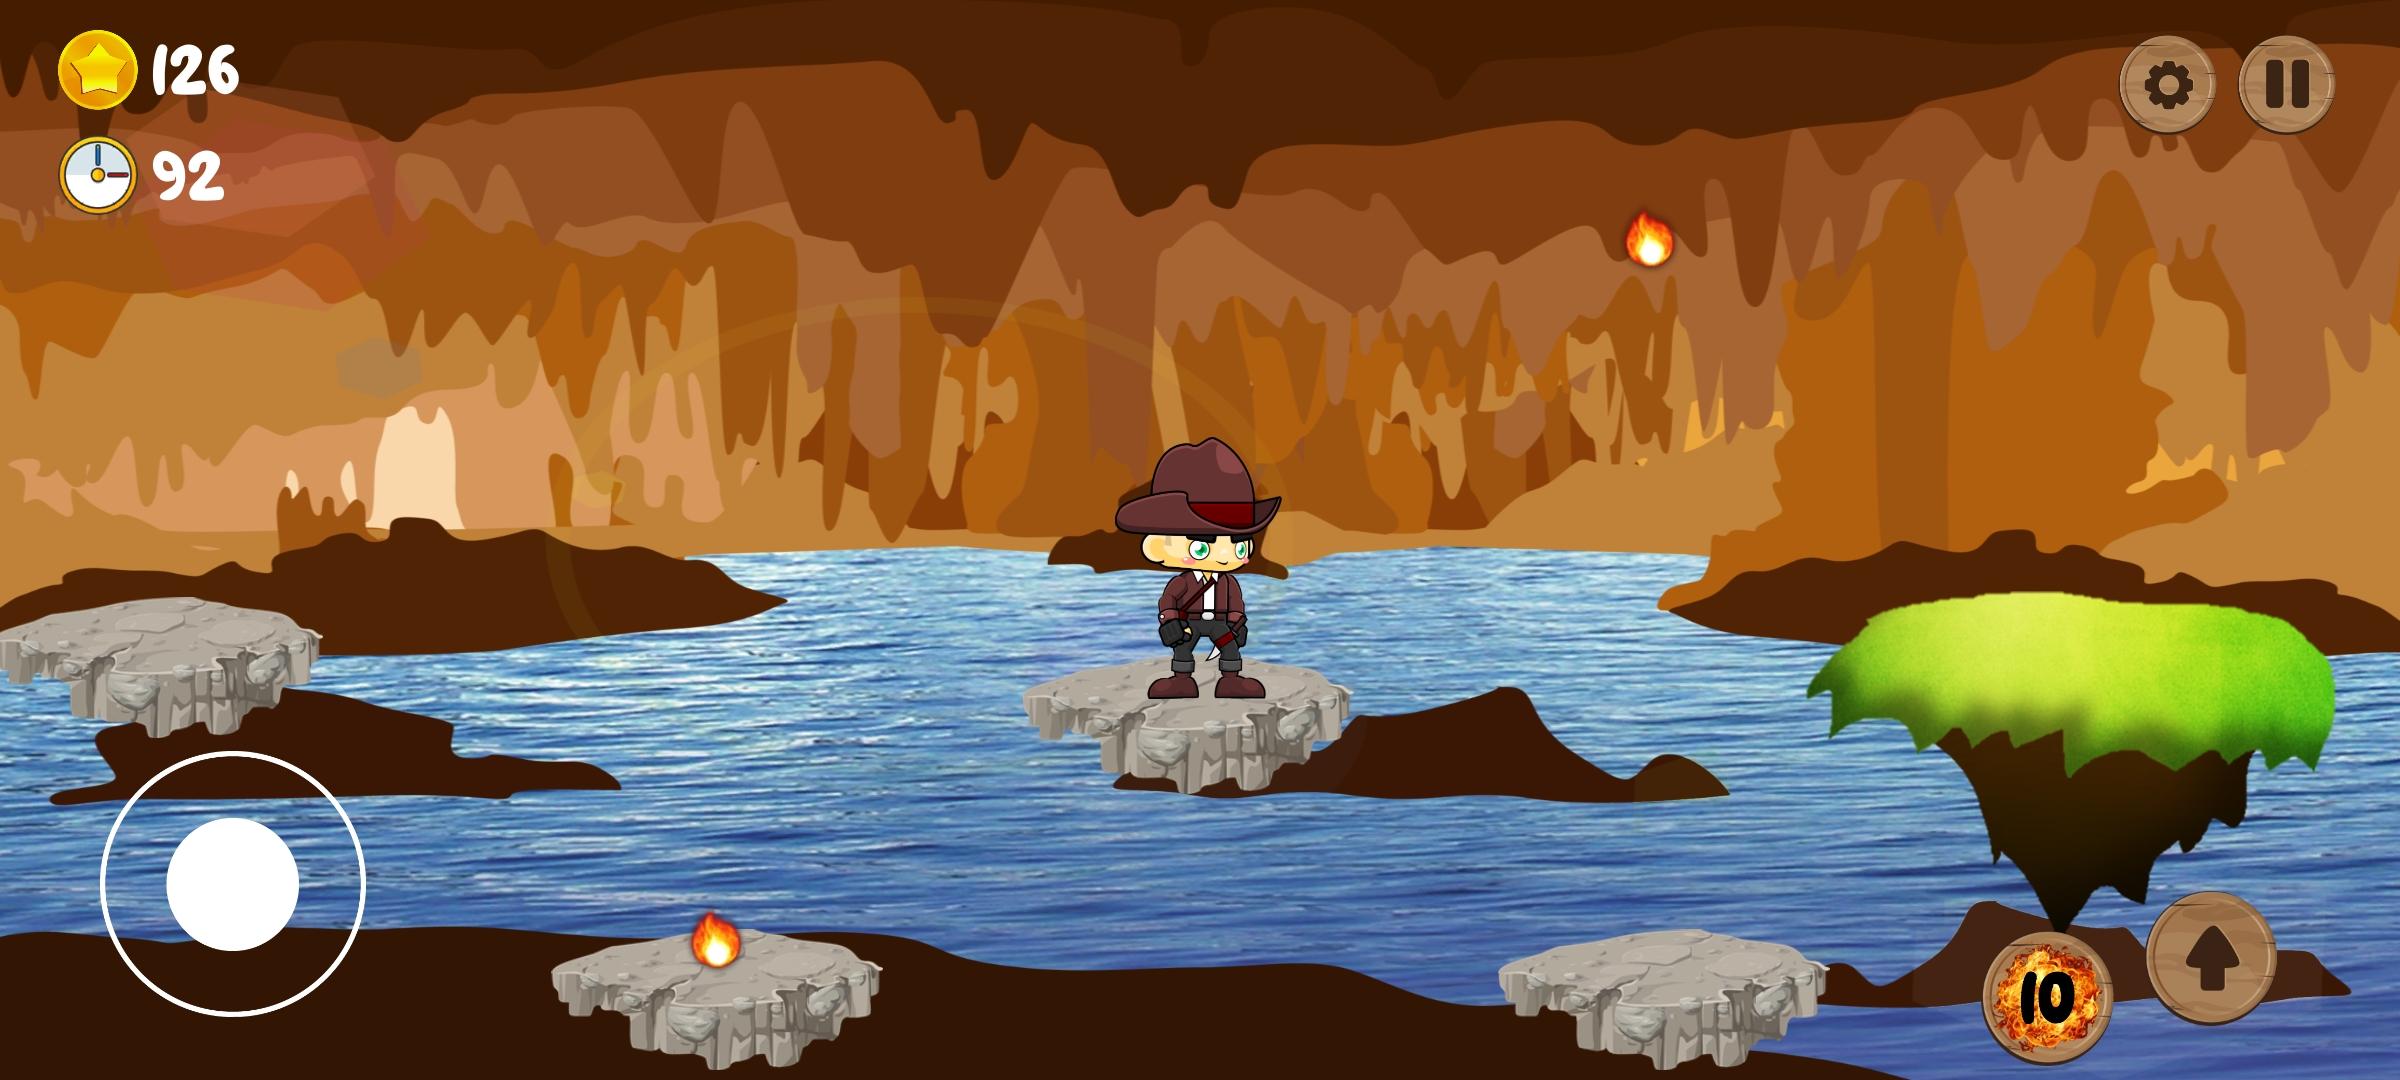 RFG - Adventure Boy 1.6 Screenshot 10